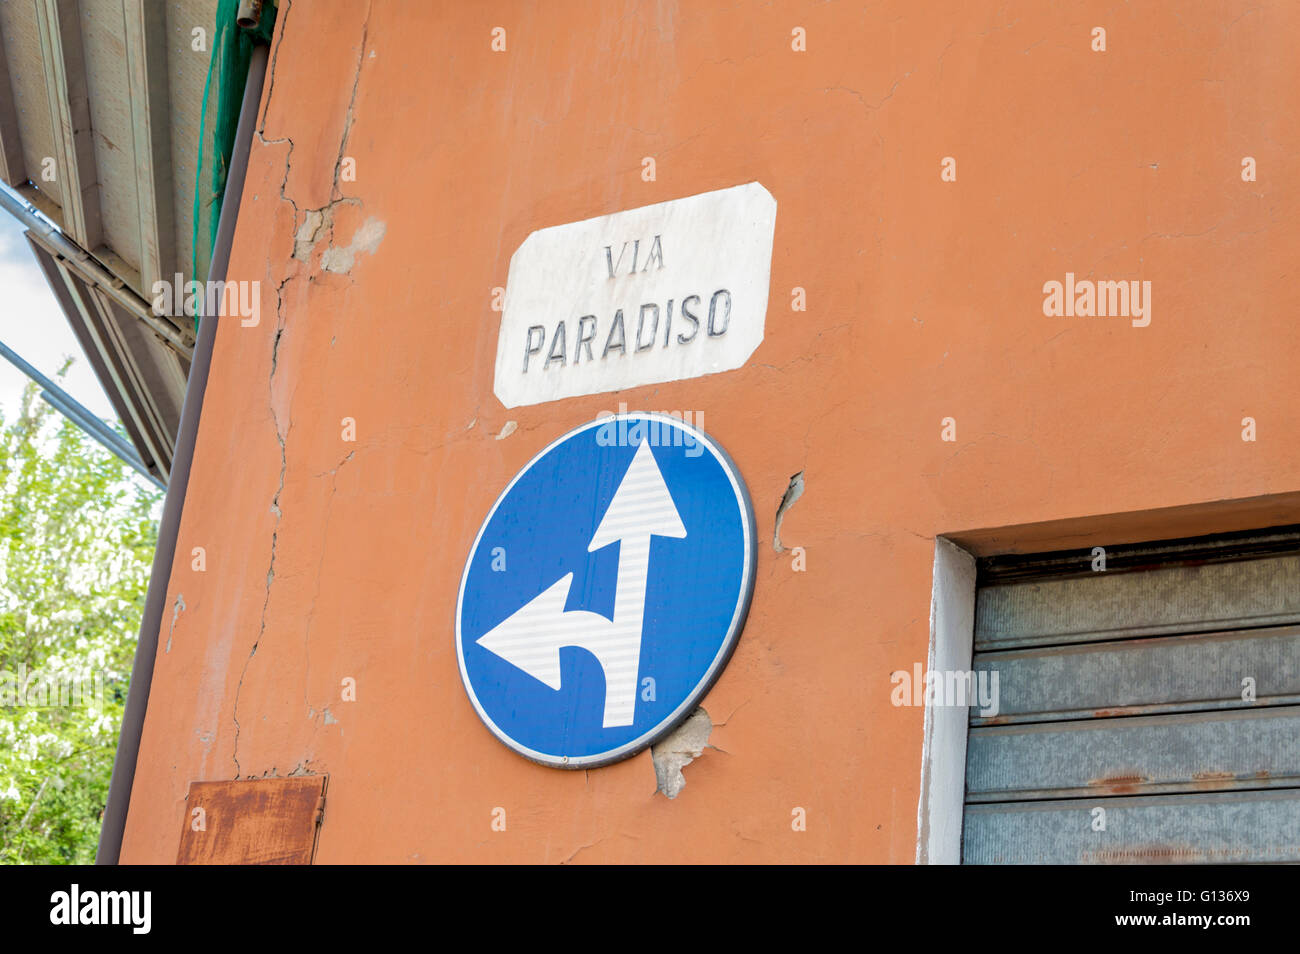 Sigboard 'Via Paradiso' Stock Photo